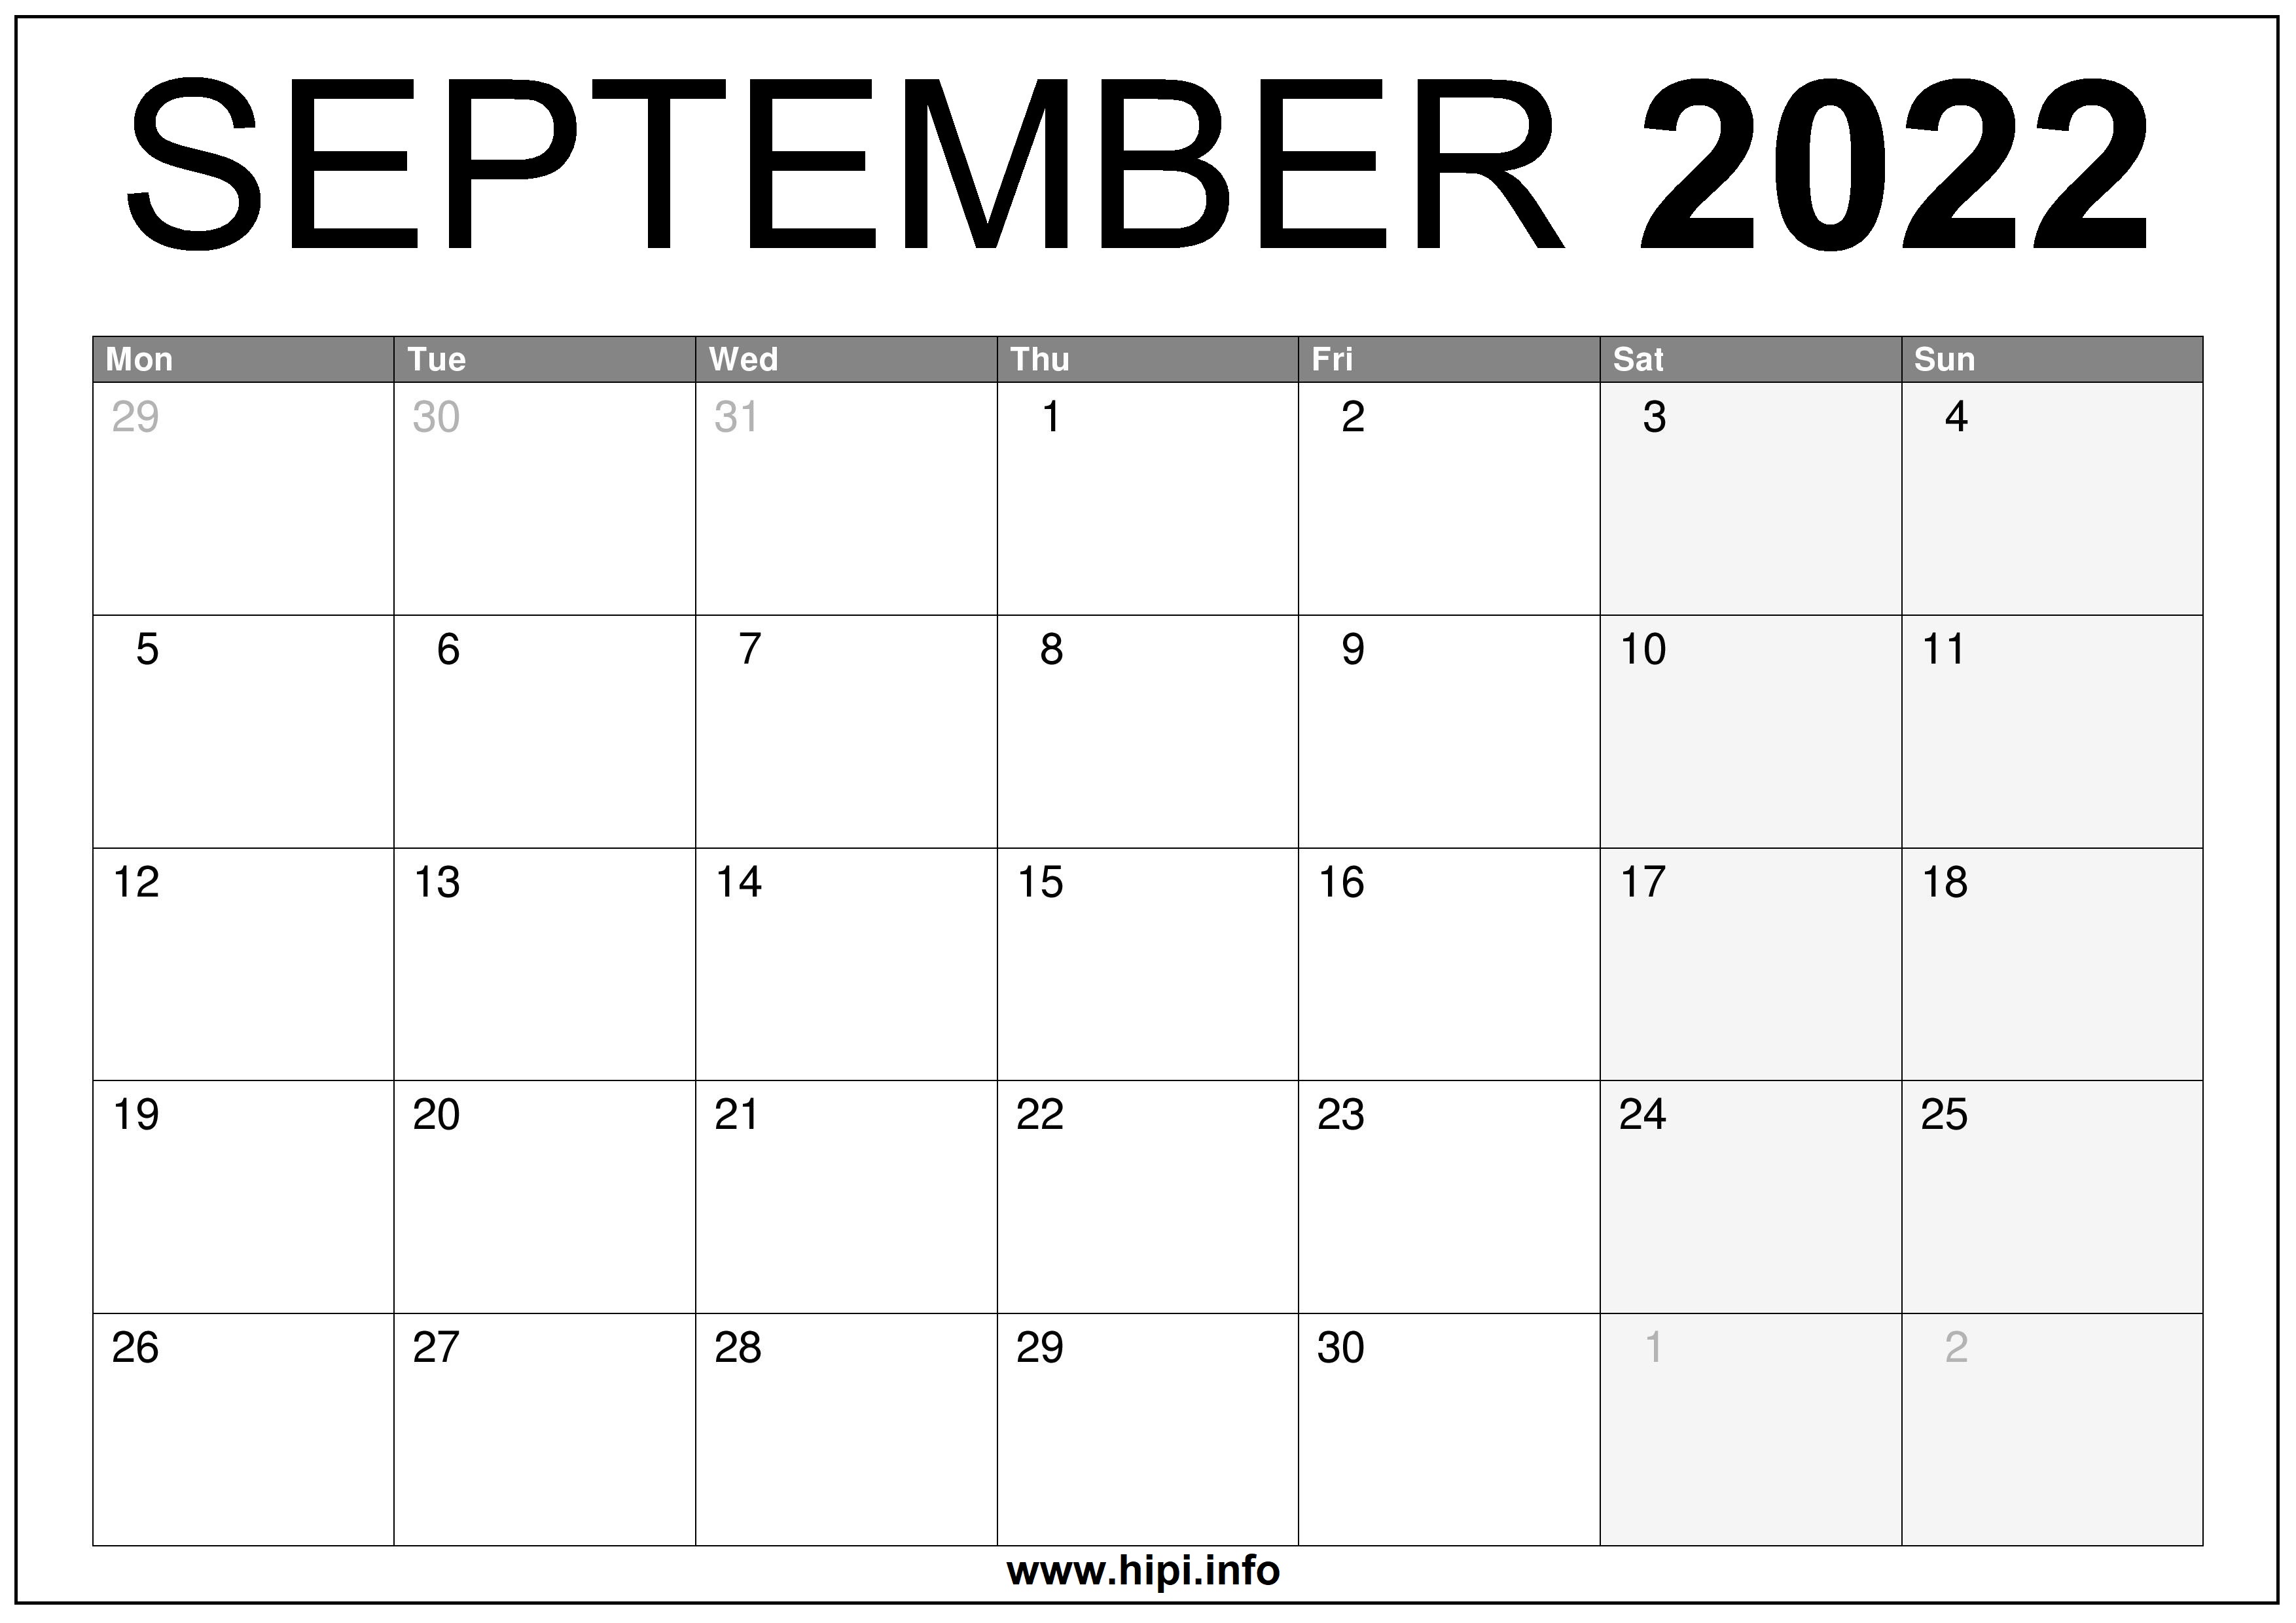 Sept 2022 Printable Calendar September 2022 Uk Calendar Printable Free - Hipi.info | Calendars Printable  Free